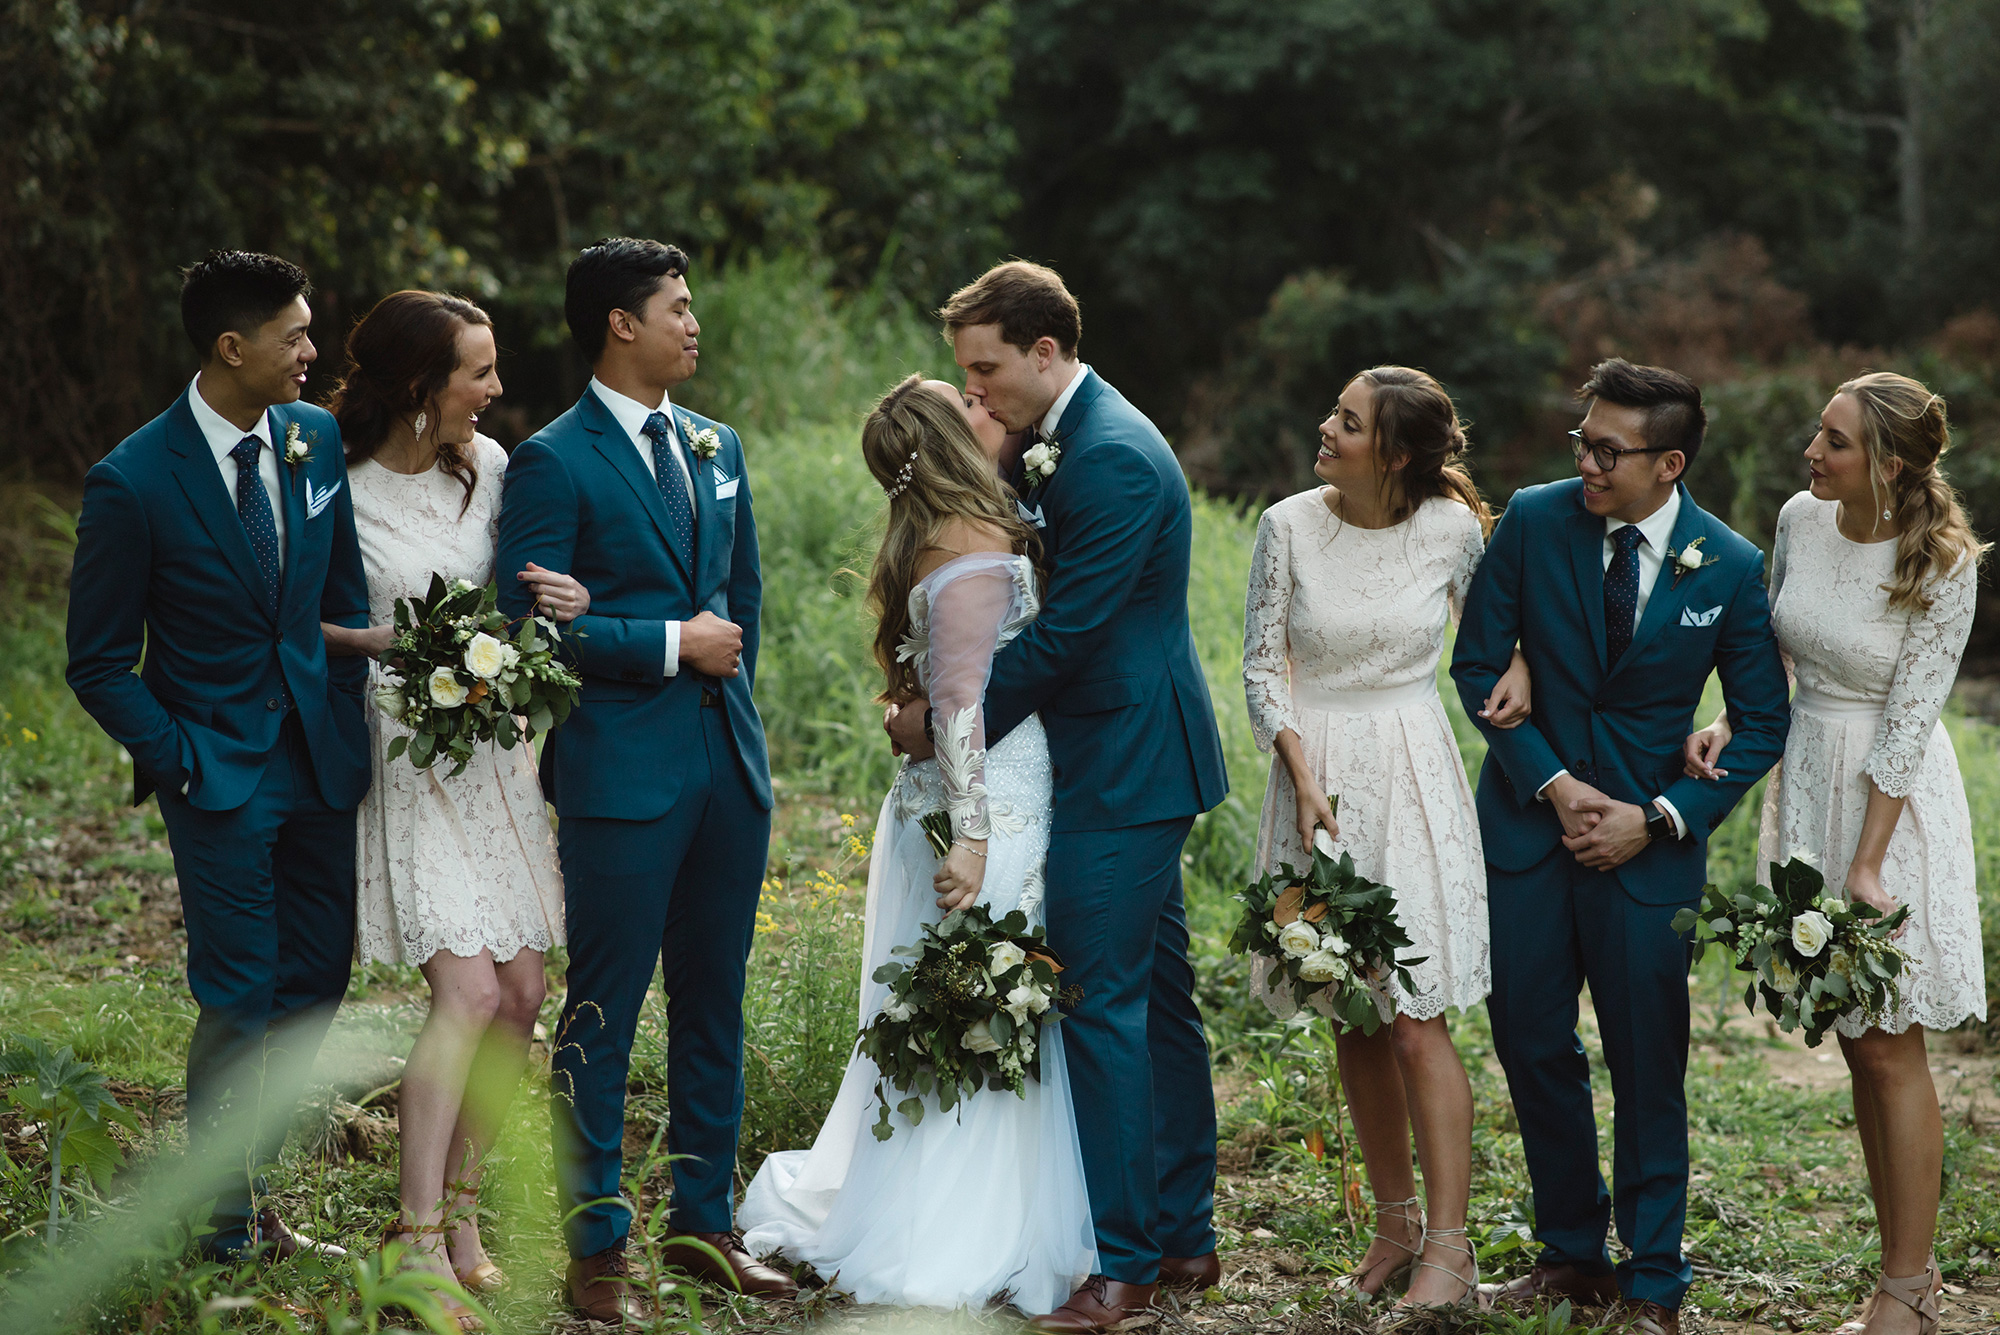 Sophia_Dan_Rustic-Rainforest-Wedding_Deb-Boots_033